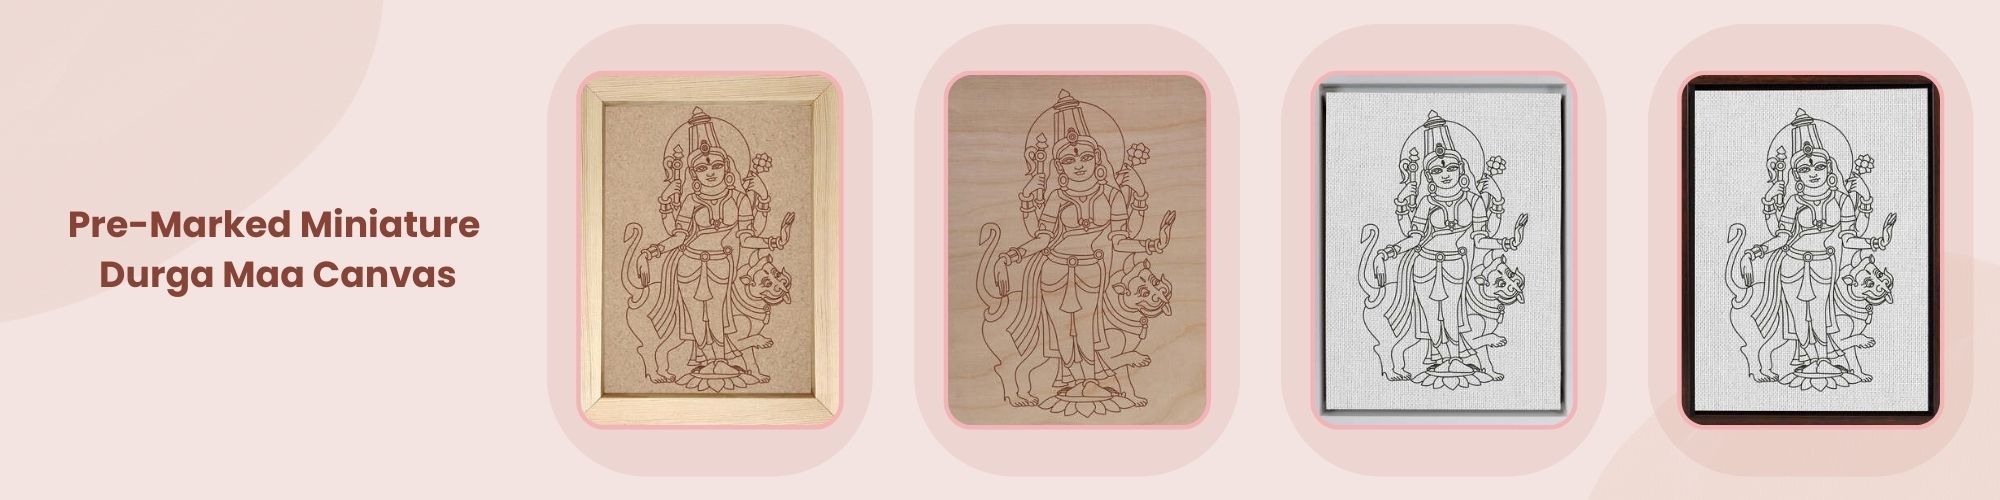 Pre-Marked Miniature Durga Maa Canvas